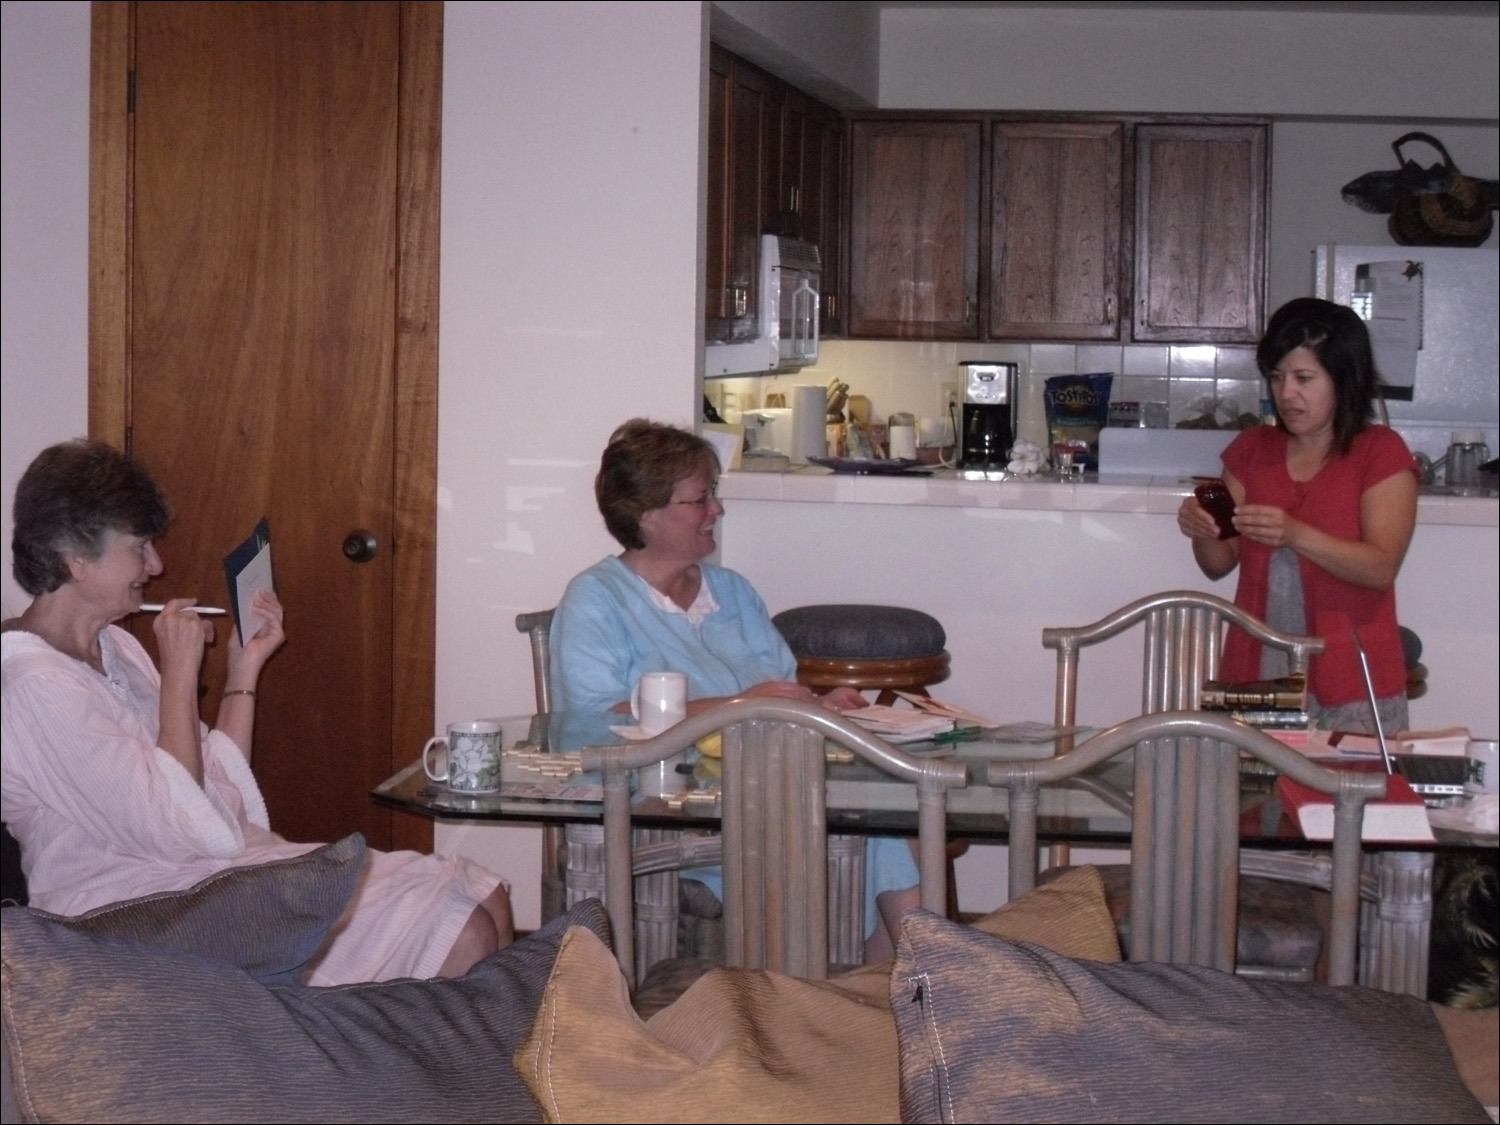 Anne, Laura, & Sherry in the condo